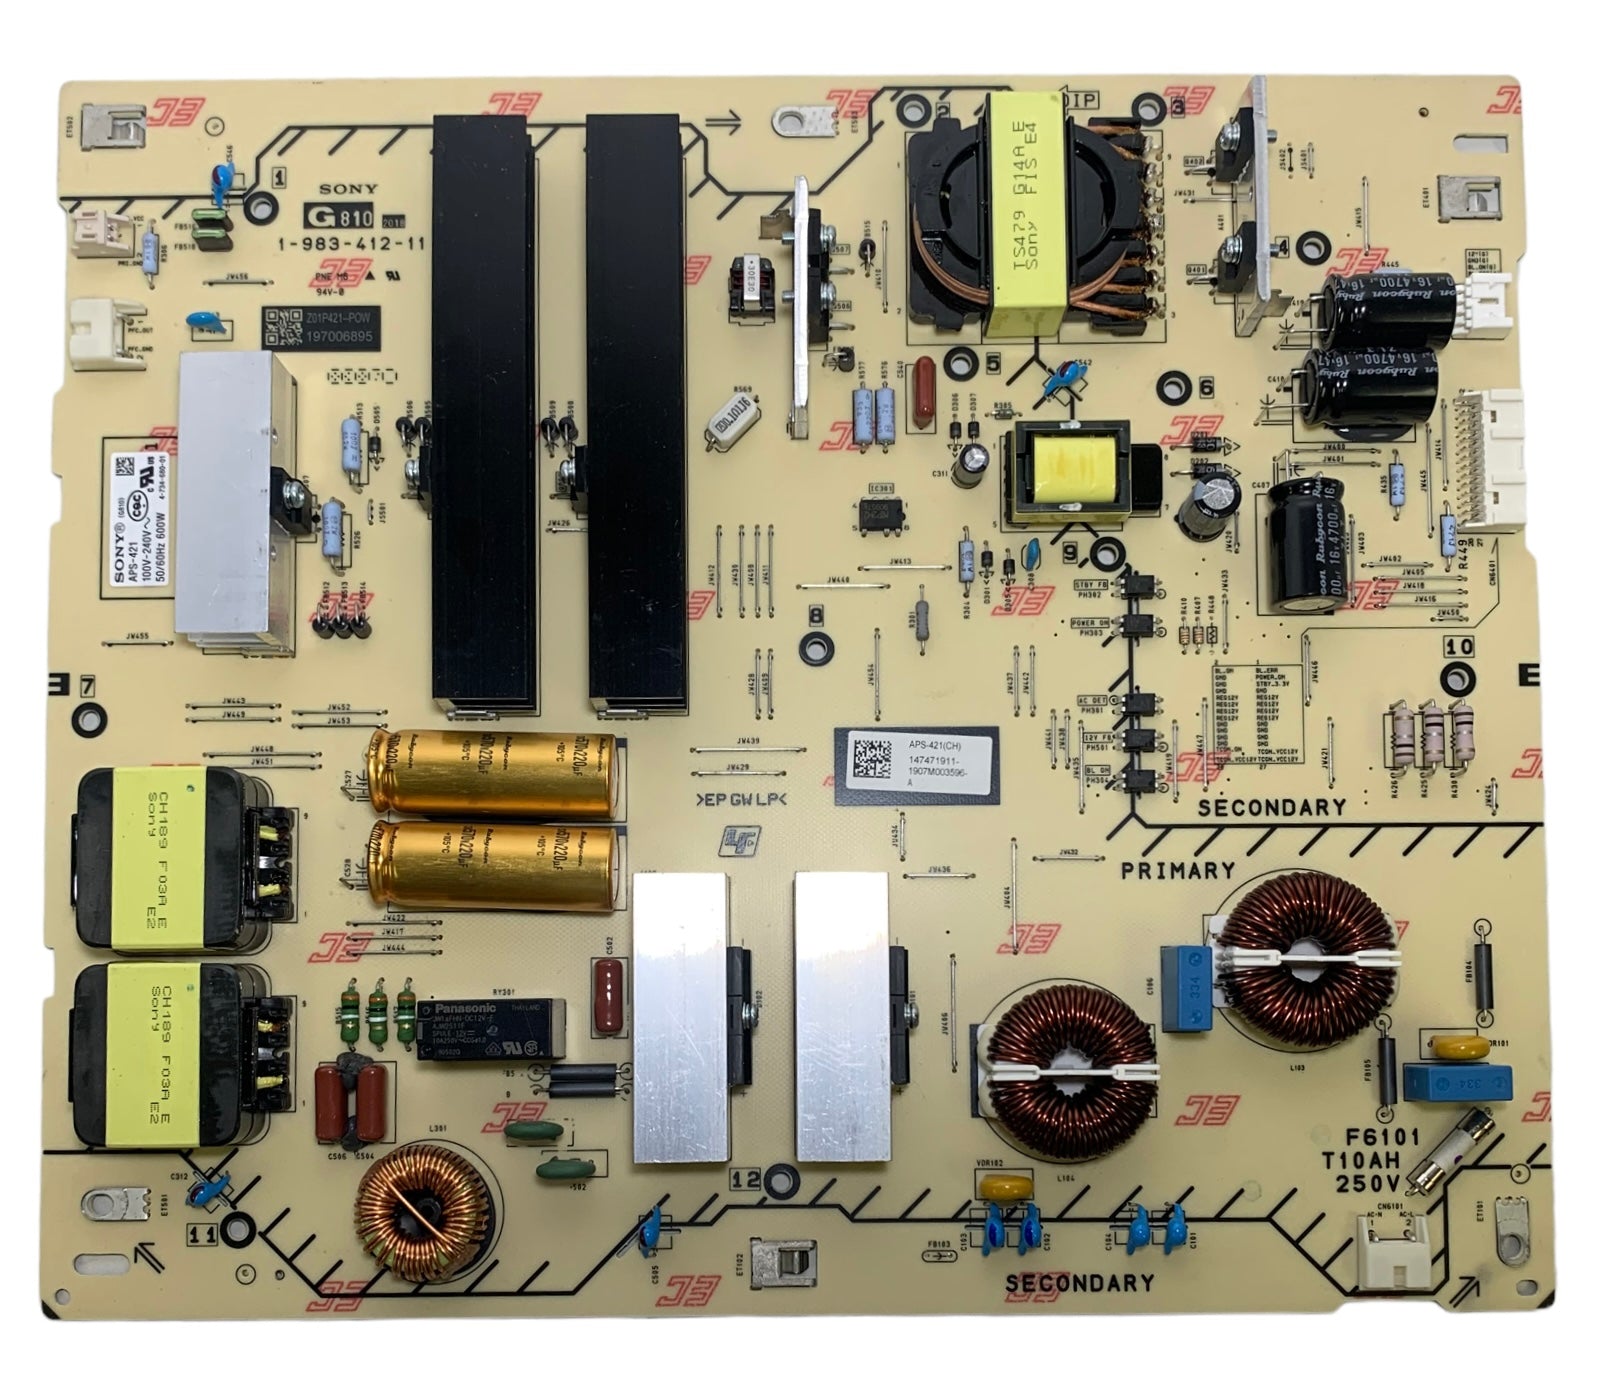 Sony 1-474-719-11 G810 Power Supply Board